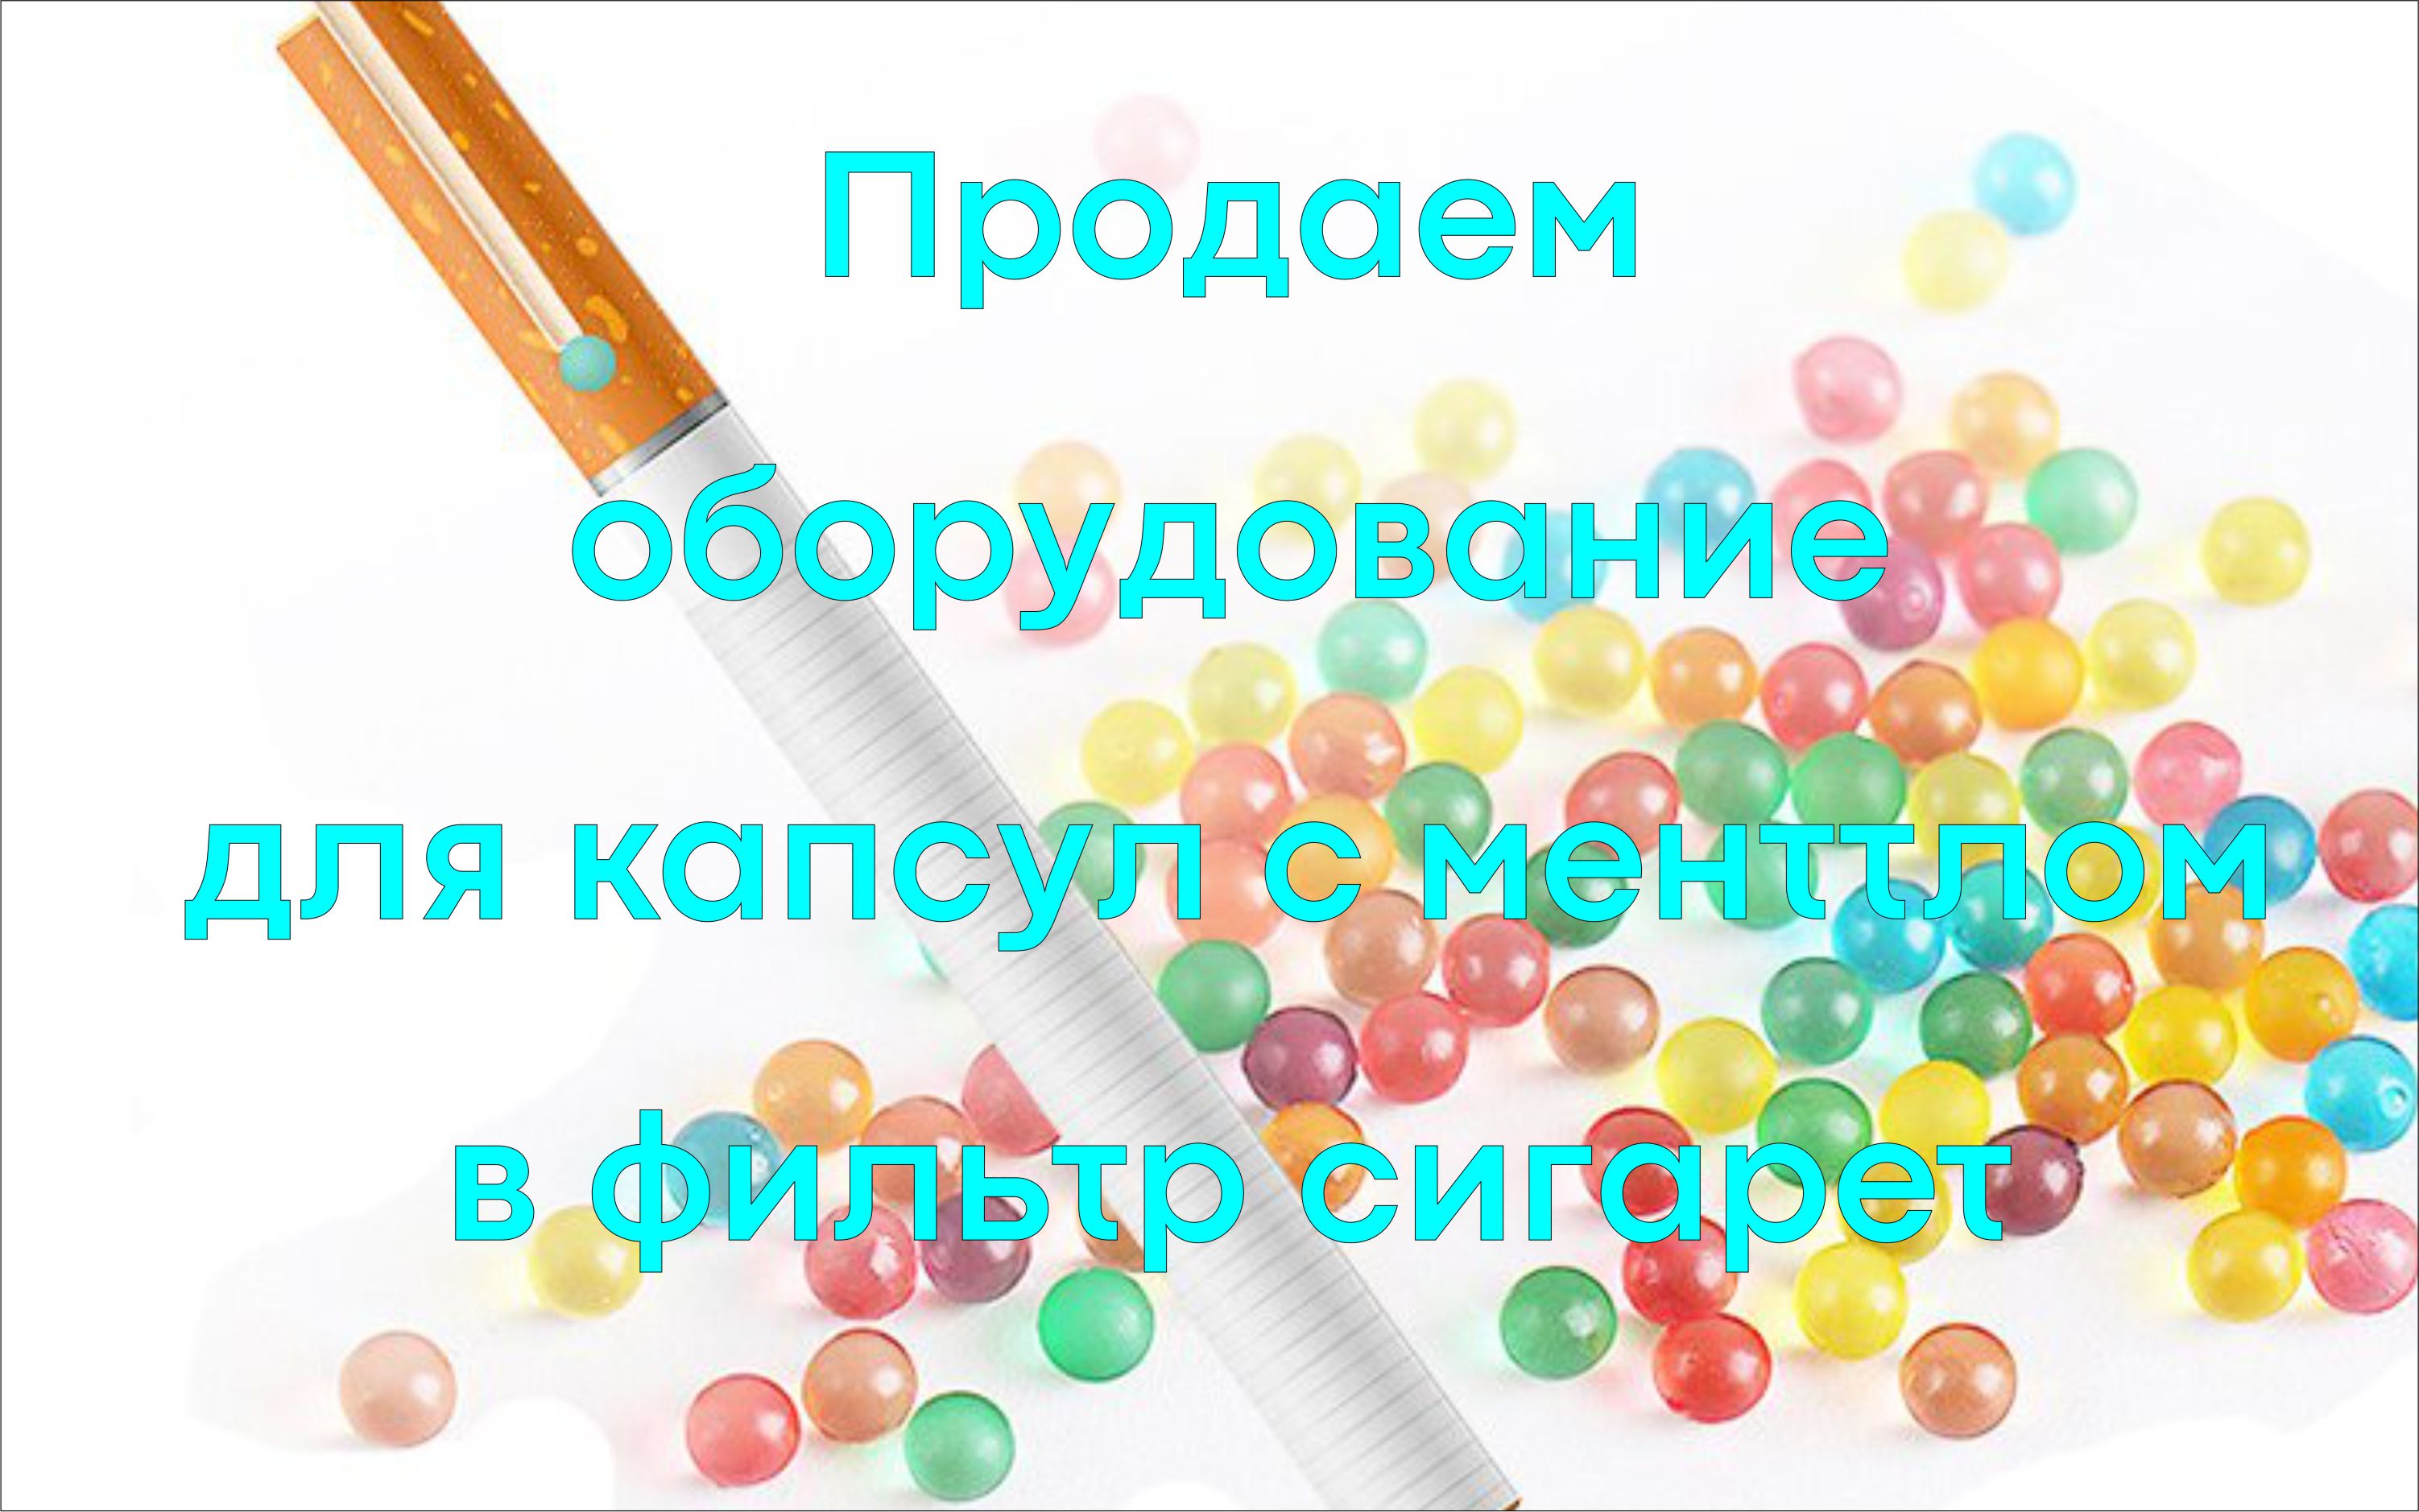 www.Kapsulator.ru Капсули меки безшевни капсули с черупки от желатин, агар, алгинат